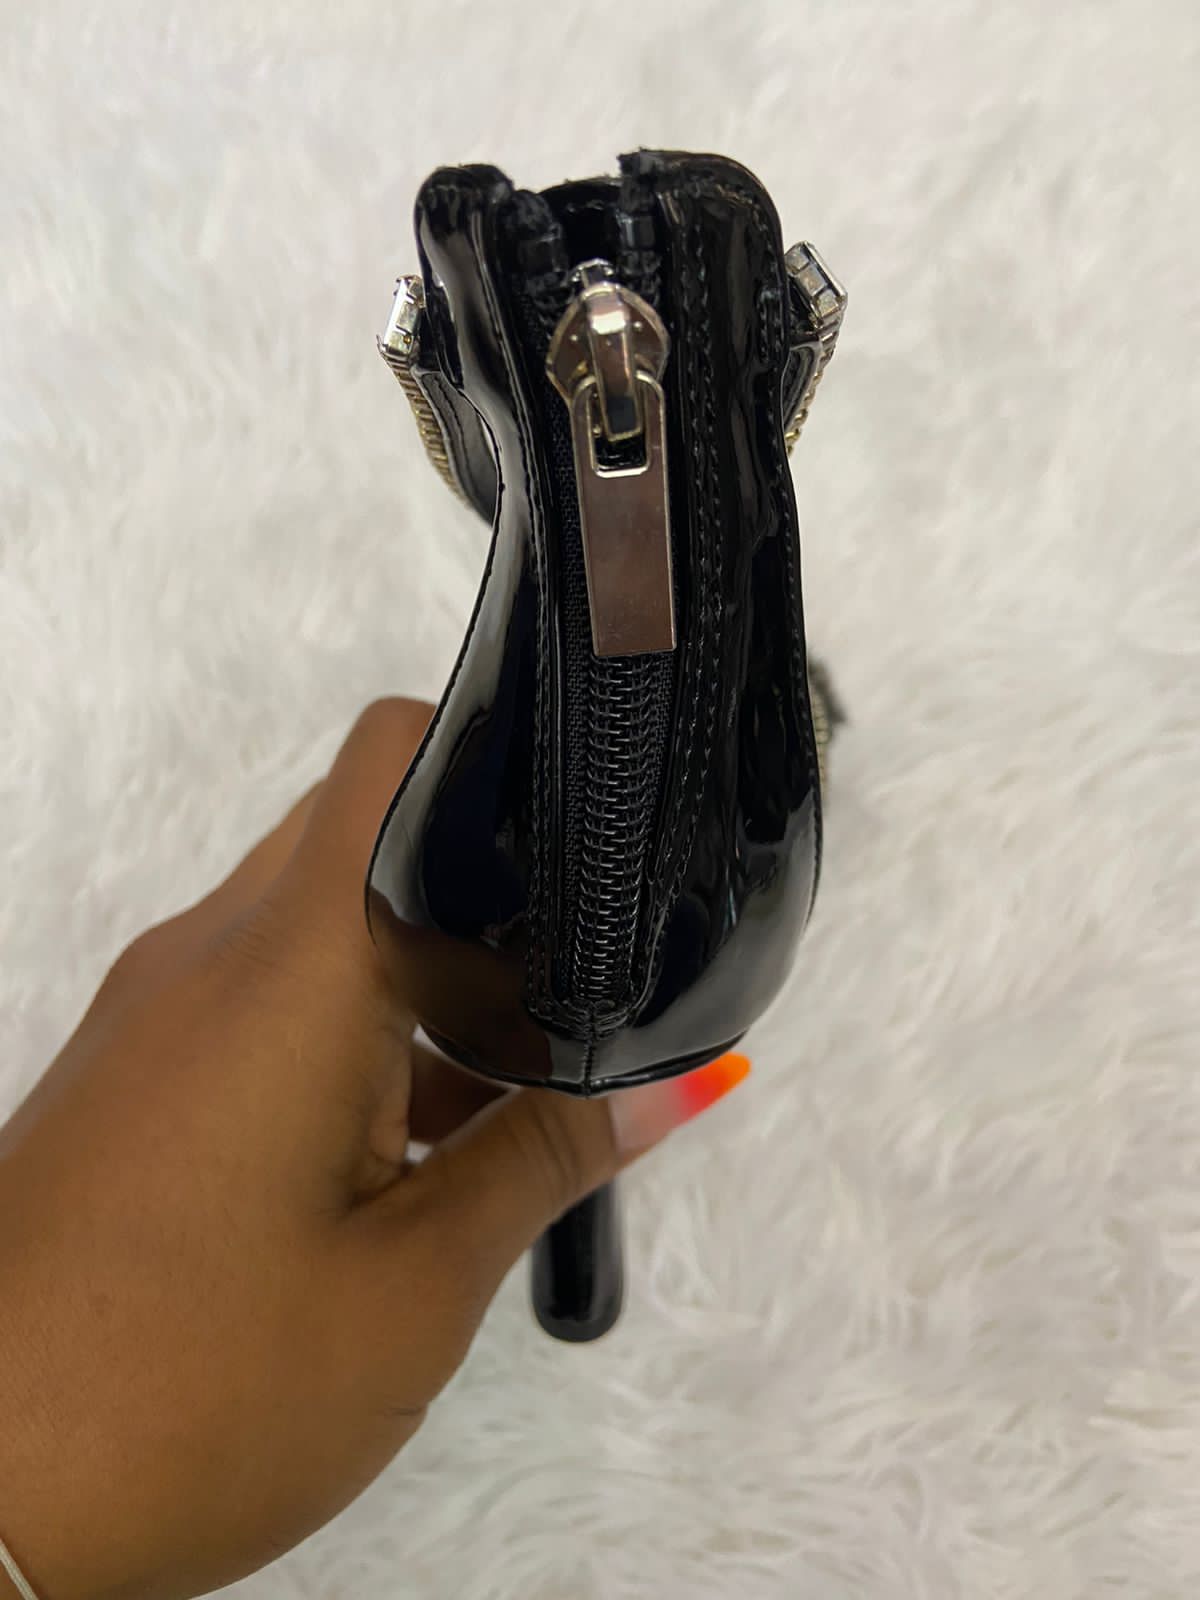 Zapatillas Fashion Nova original, negras con cadenas plateadas, tacón en forma de S.